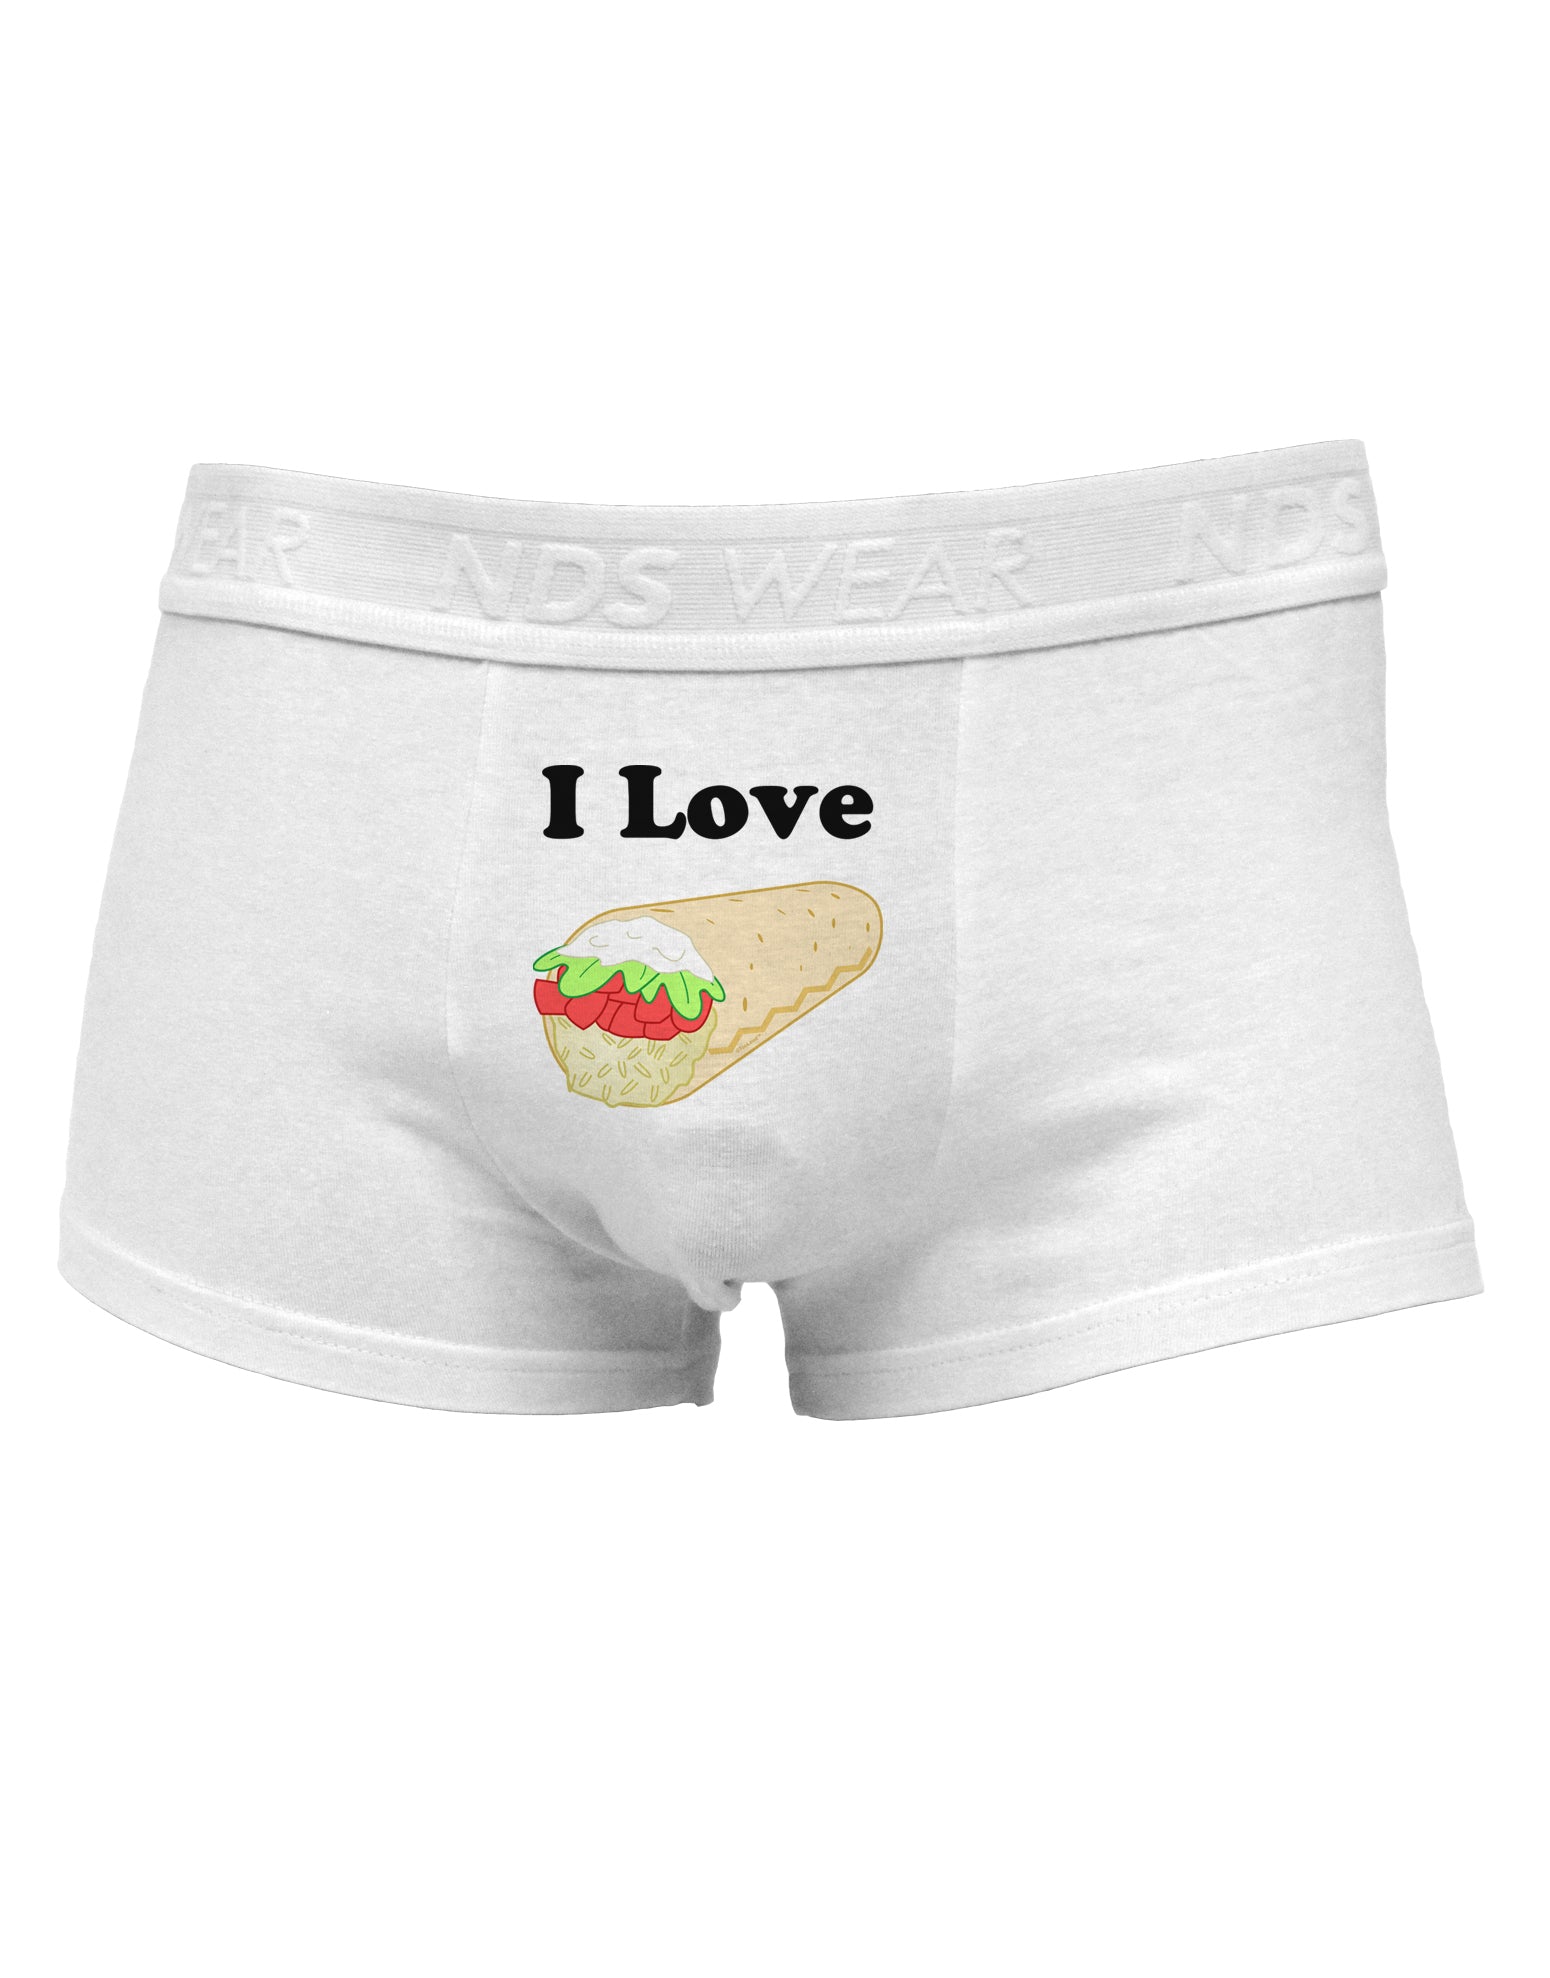 I Love Burritos - Funny Food Mens Cotton Trunk Underwear - Davson Sales